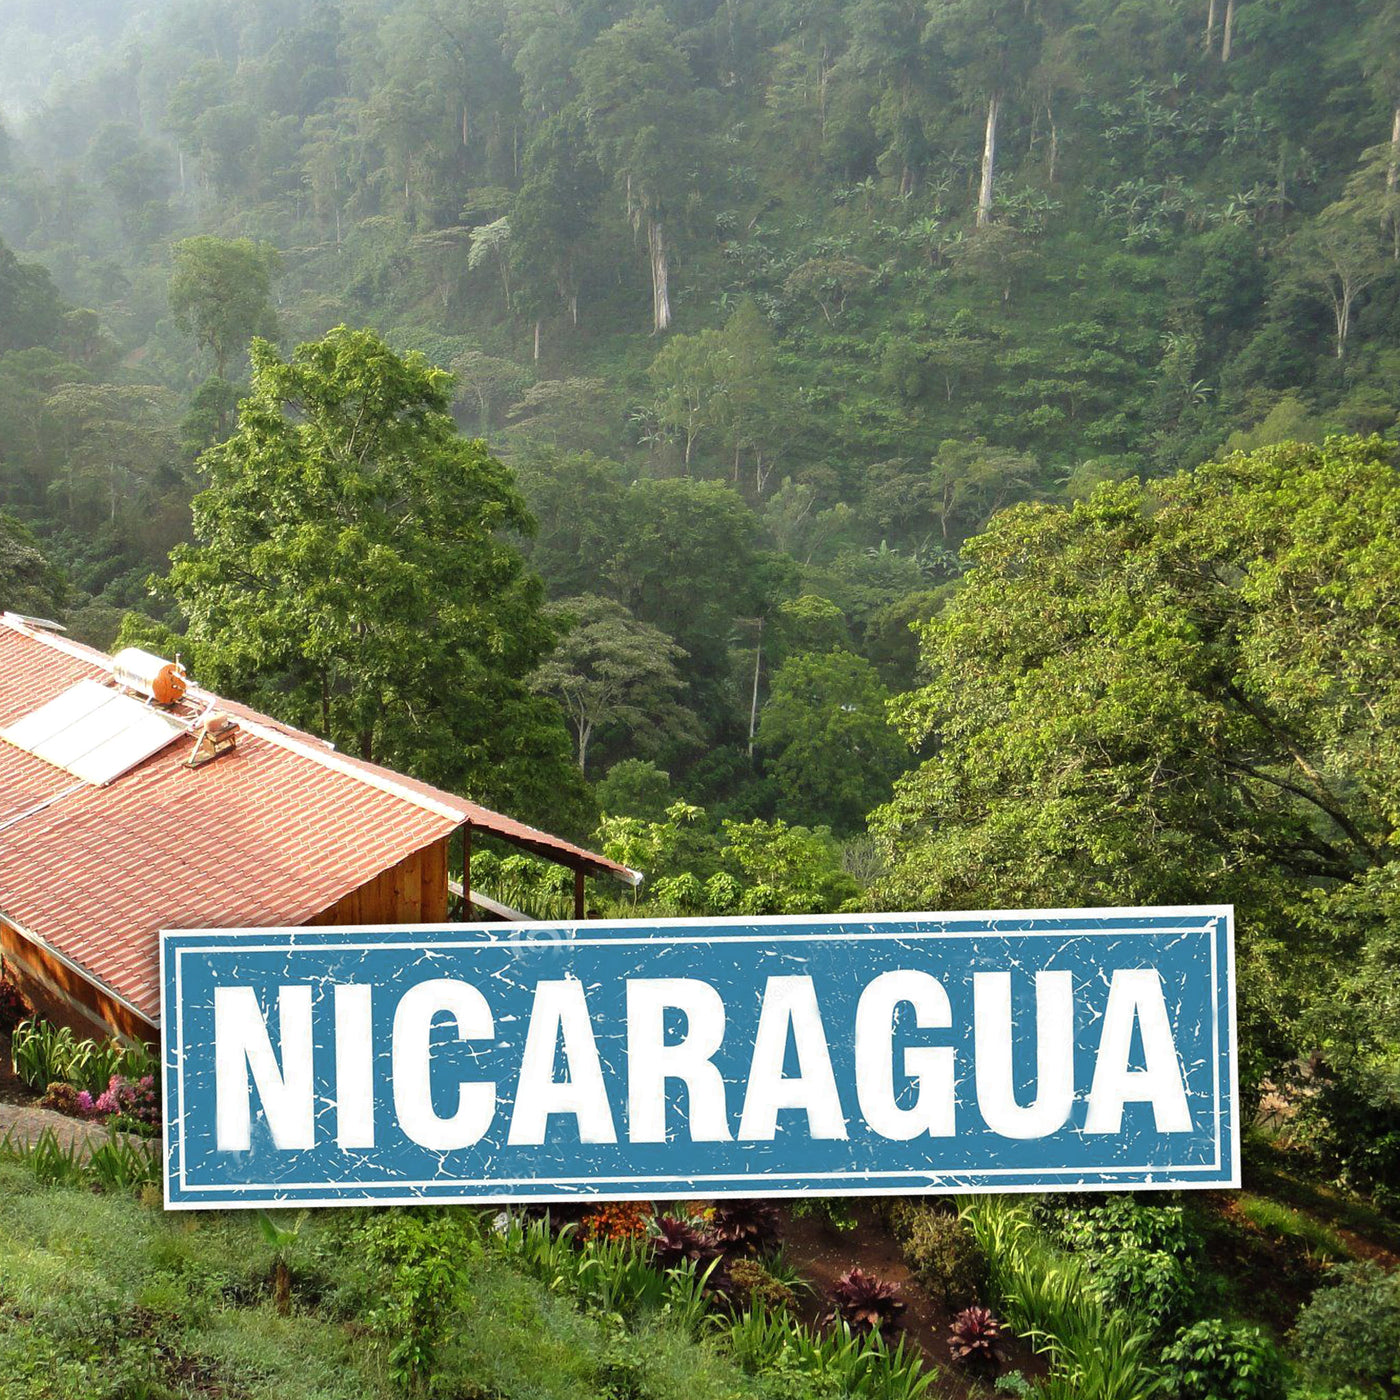 Nicaragua Jinotega Coffee